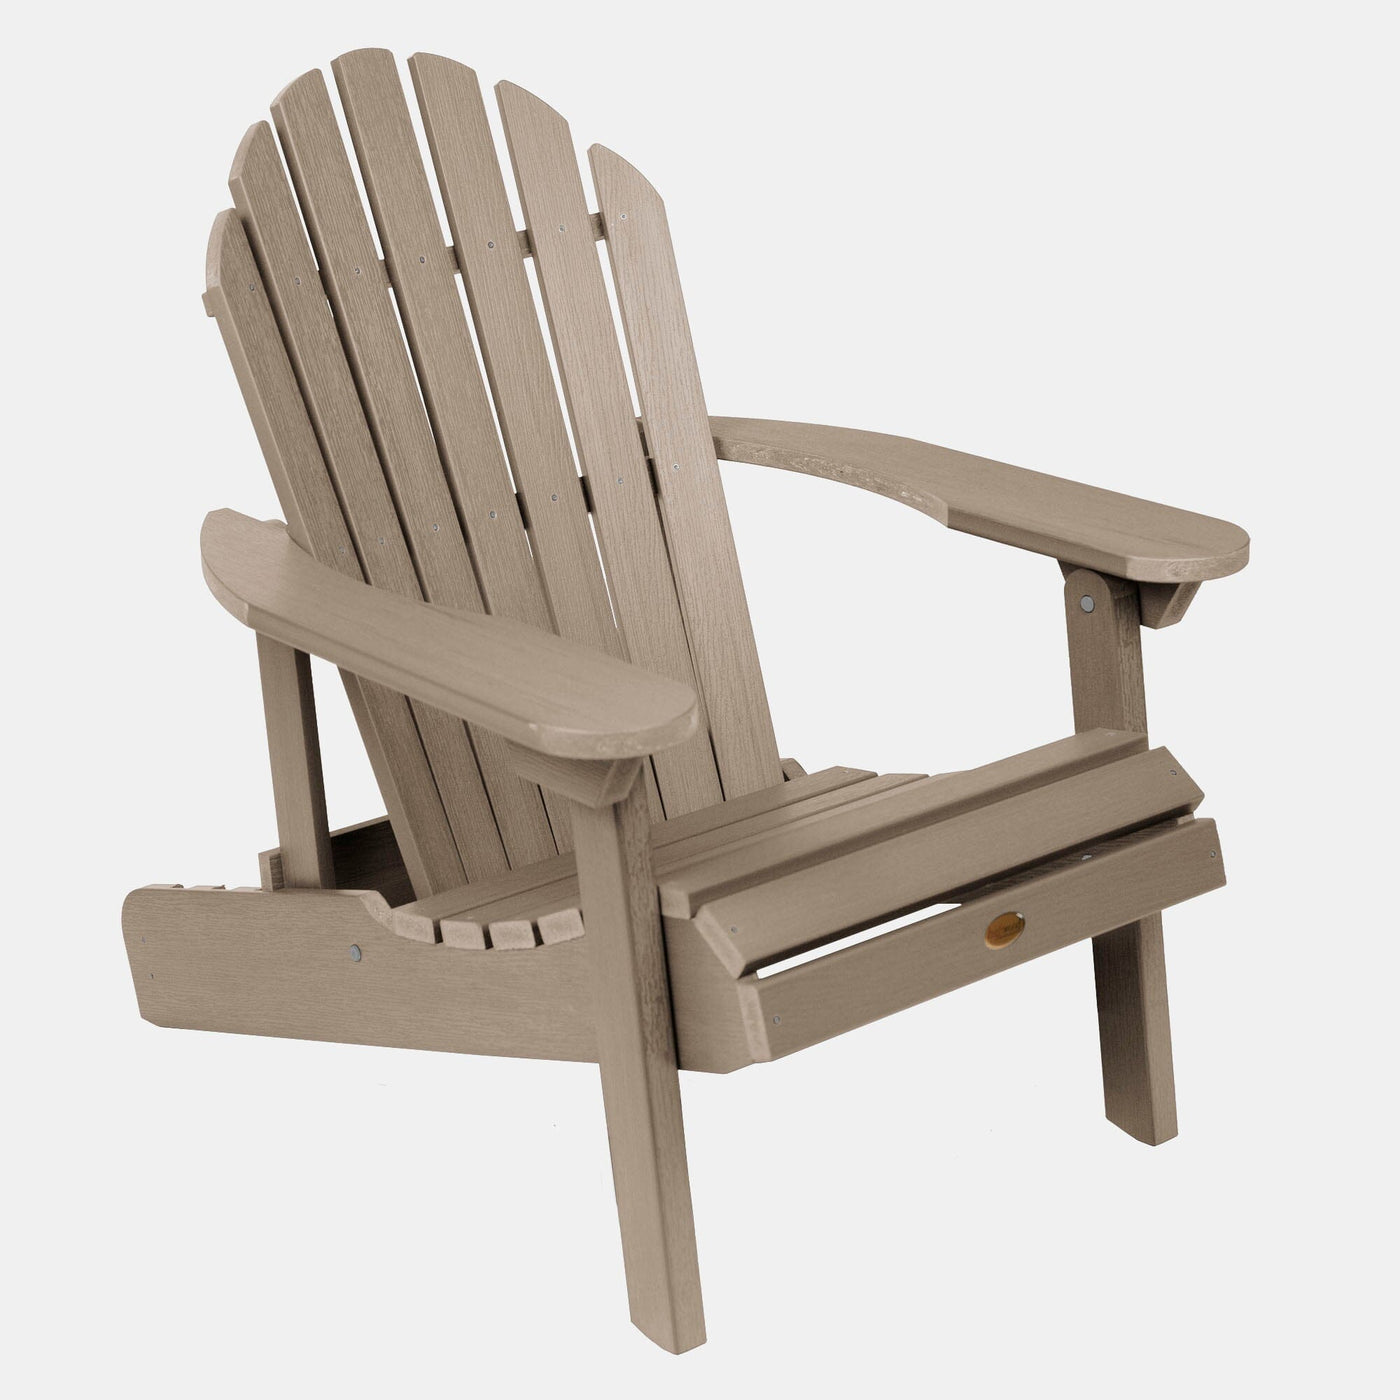 Hamilton Adirondack chair in Woodland brown